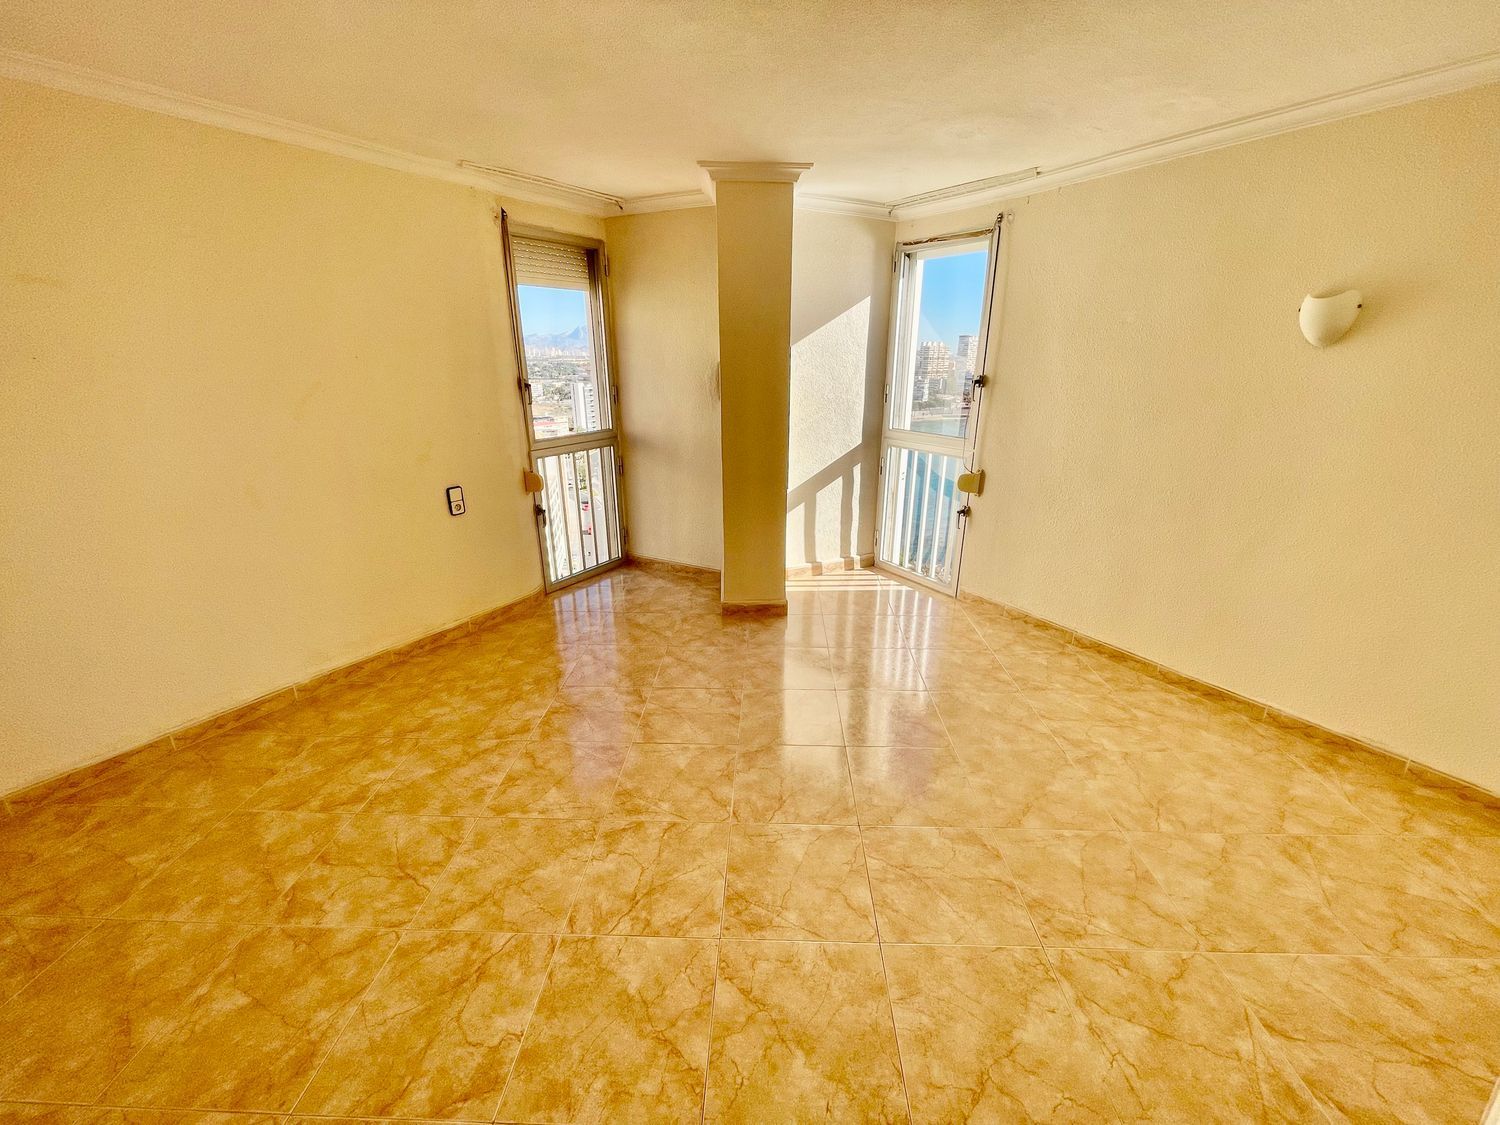 Apartment for sale on the seafront in l'Albufereta, in Alicante